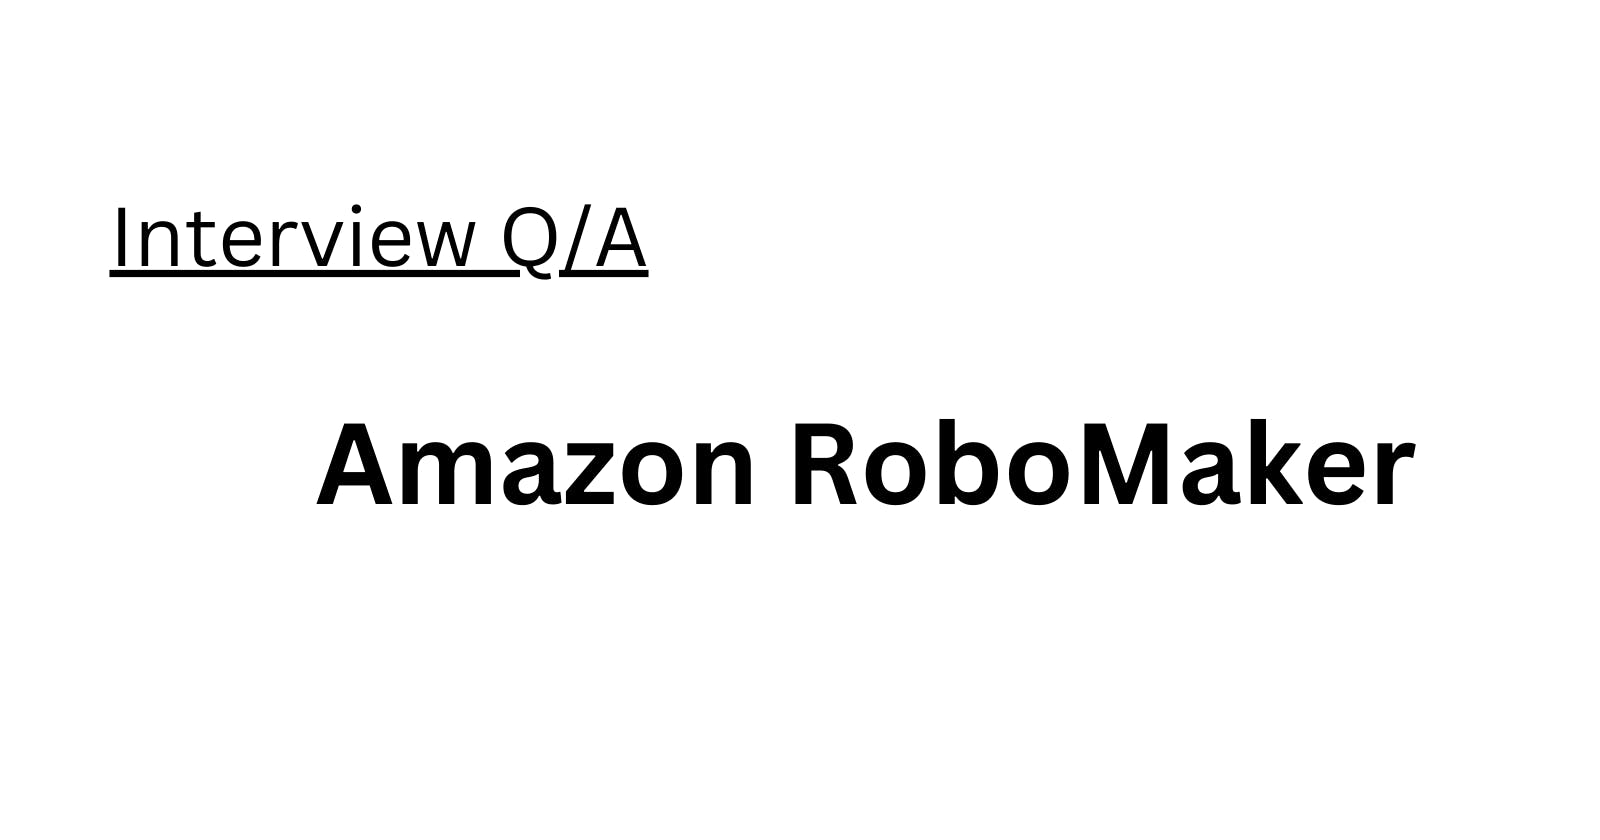 Amazon RoboMaker Interview Q/A